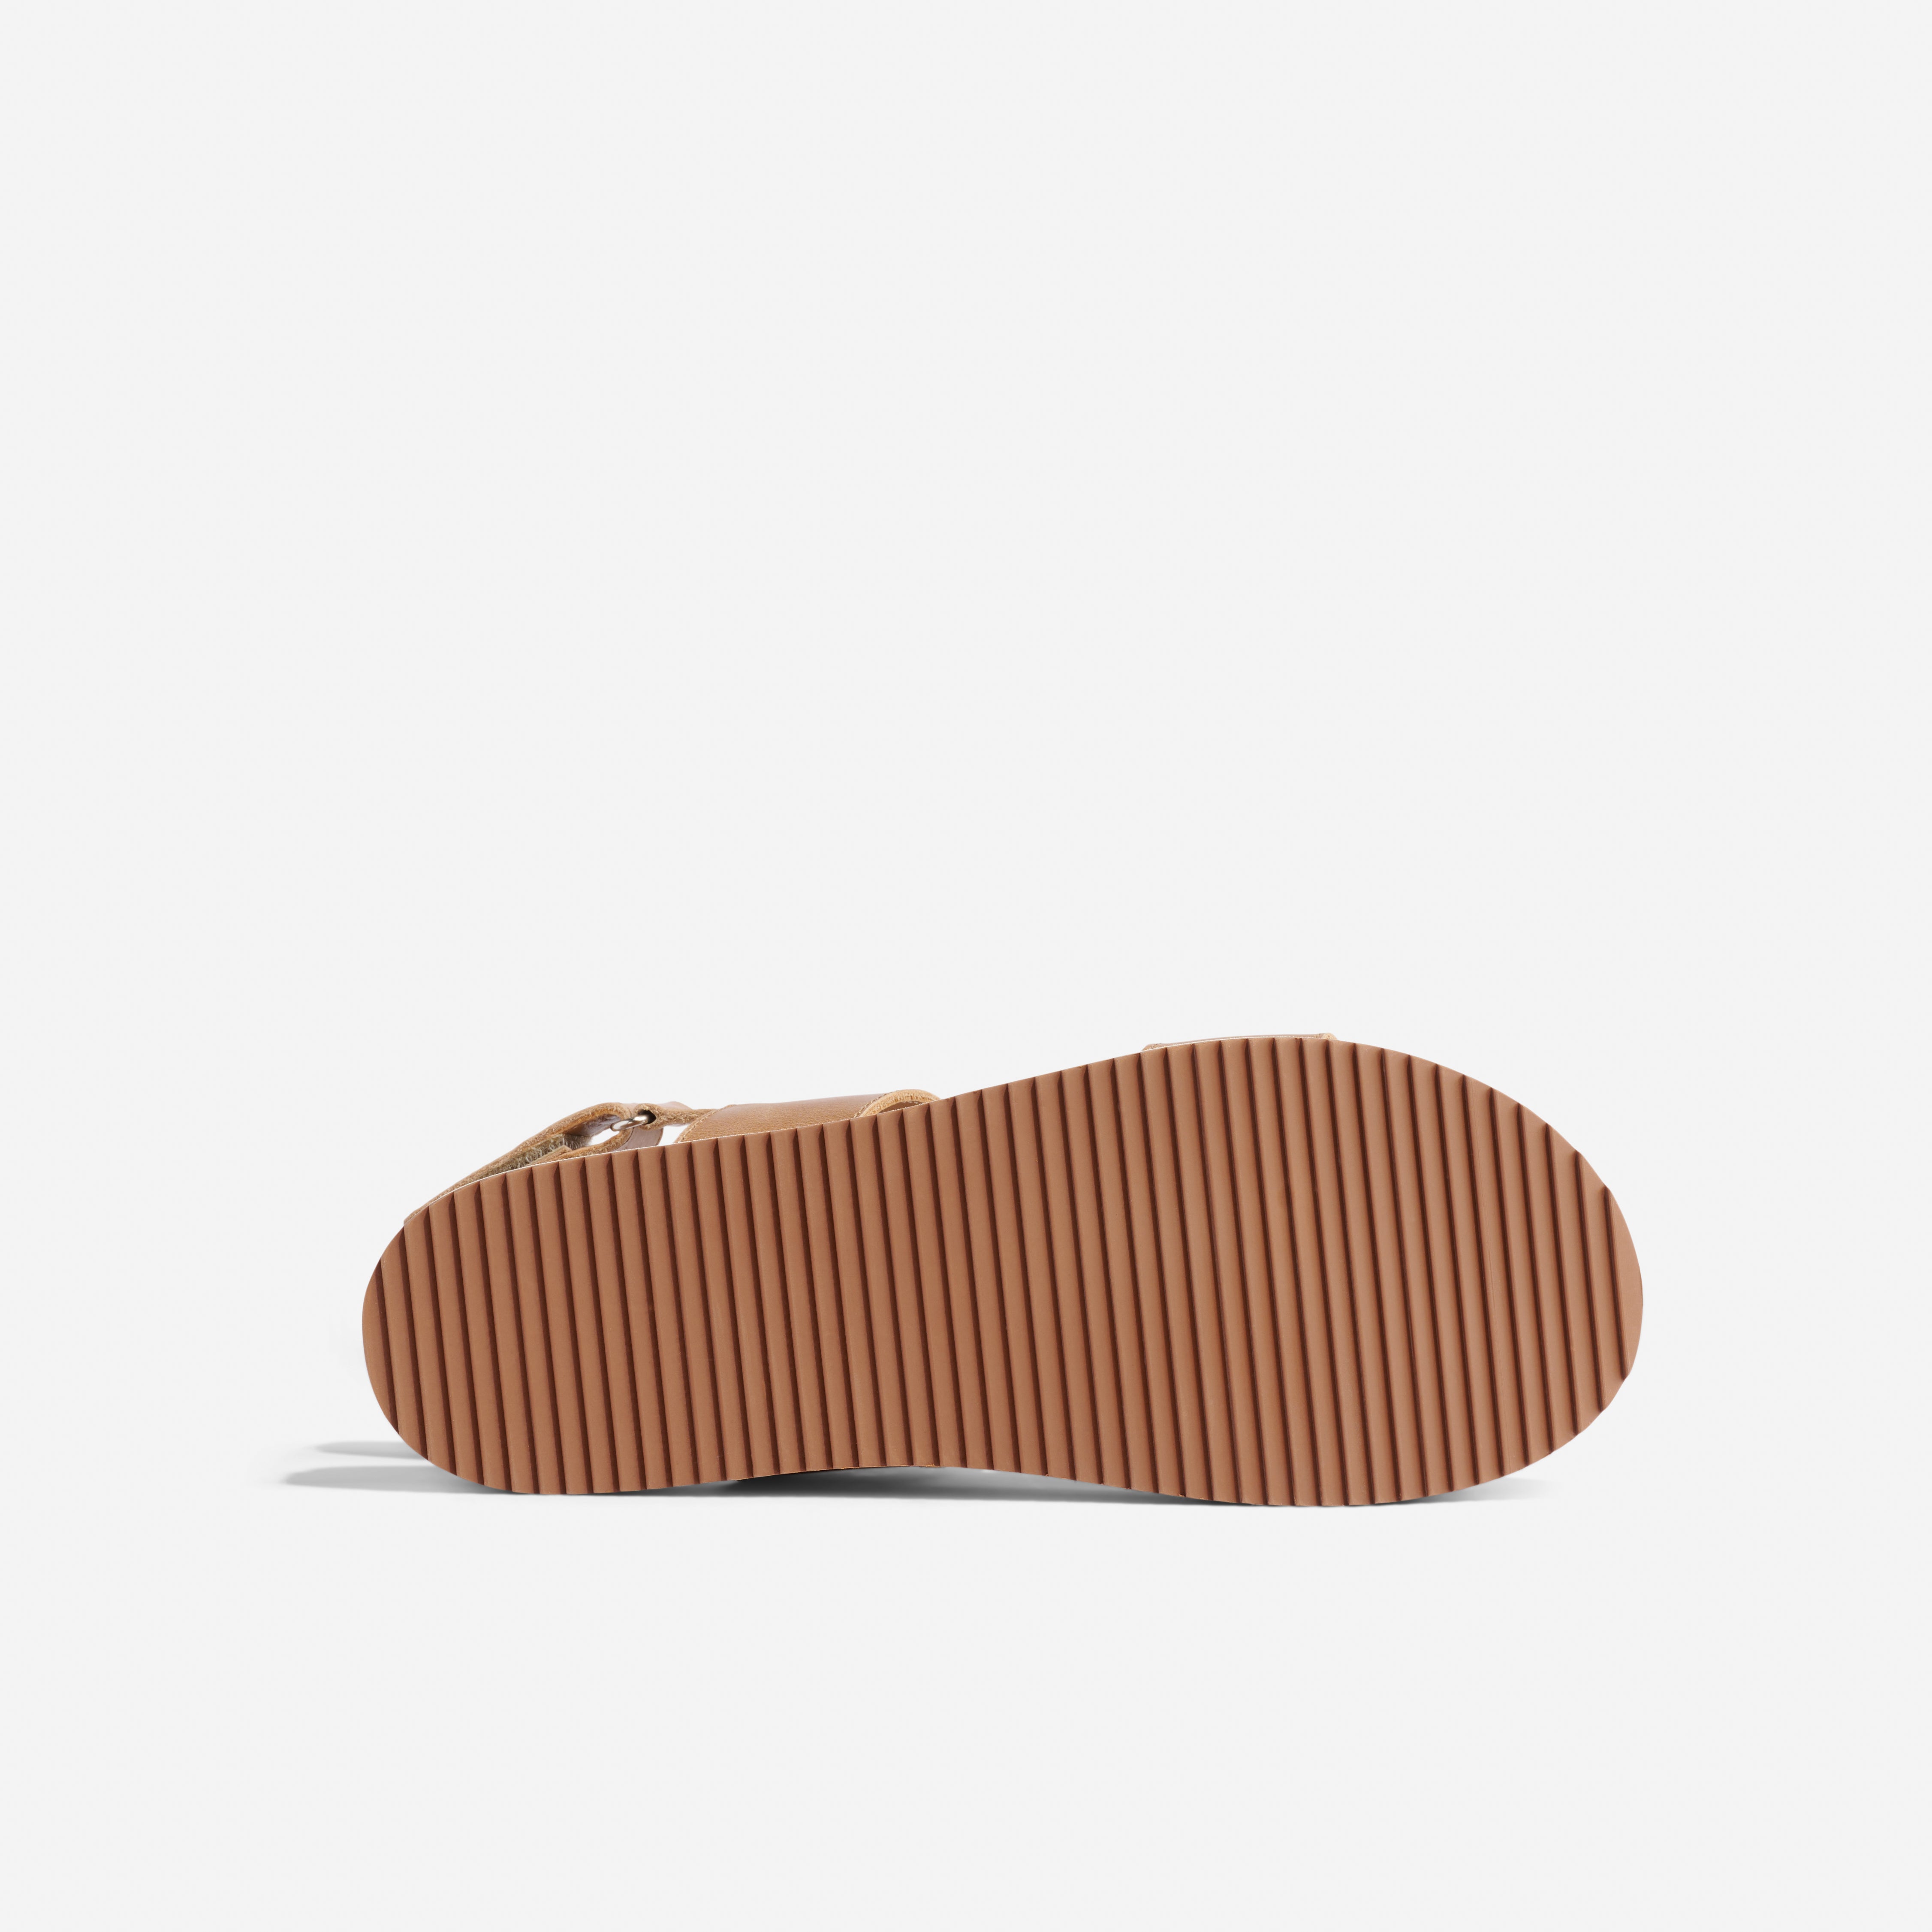 Go-To Flatform Sandal 2.0 Almond